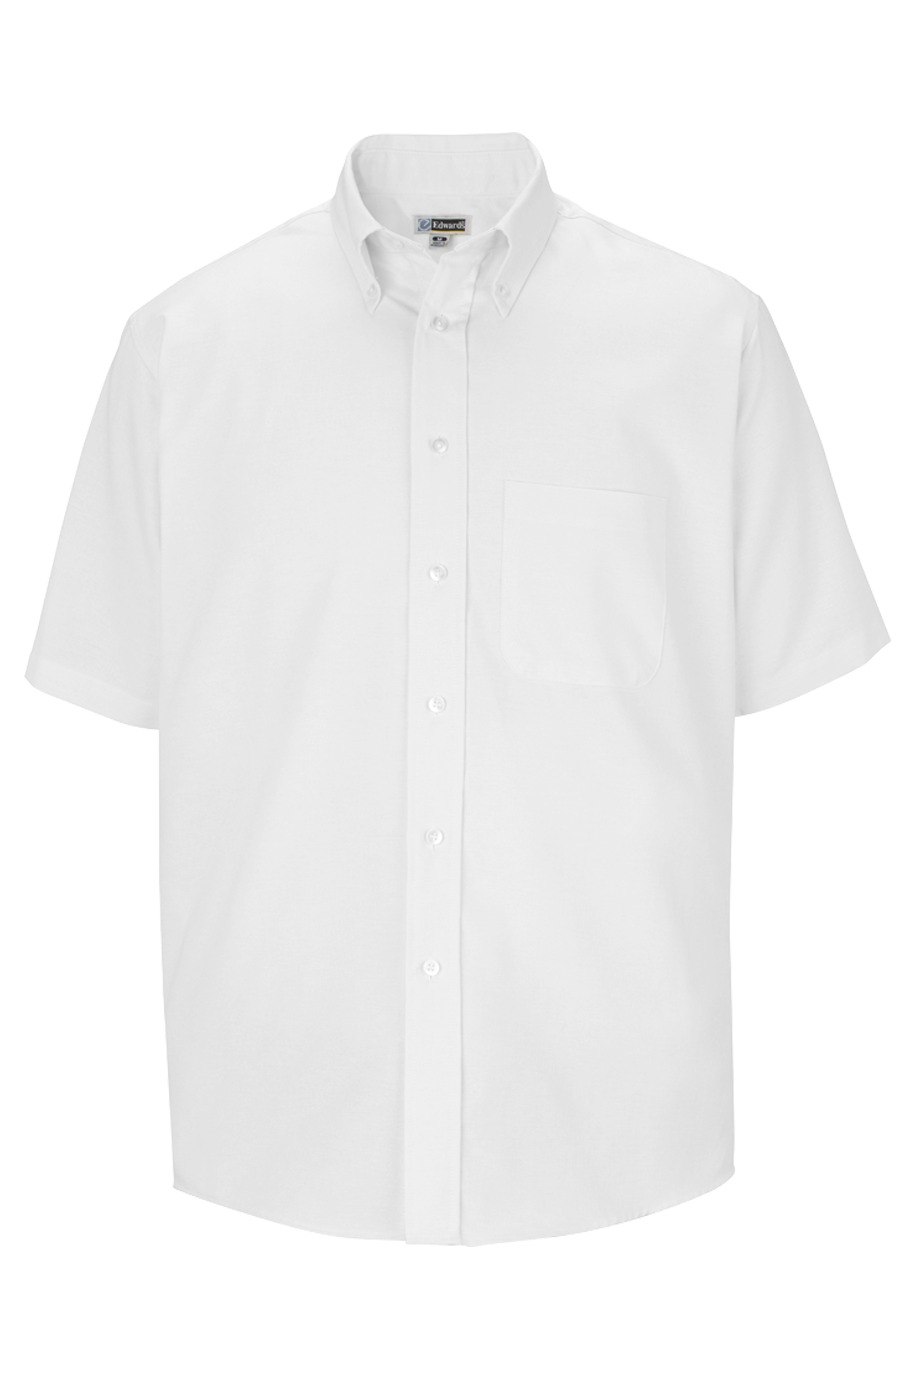 Edwards Garment 1027 - Men's Short Sleeve Oxford Shirt